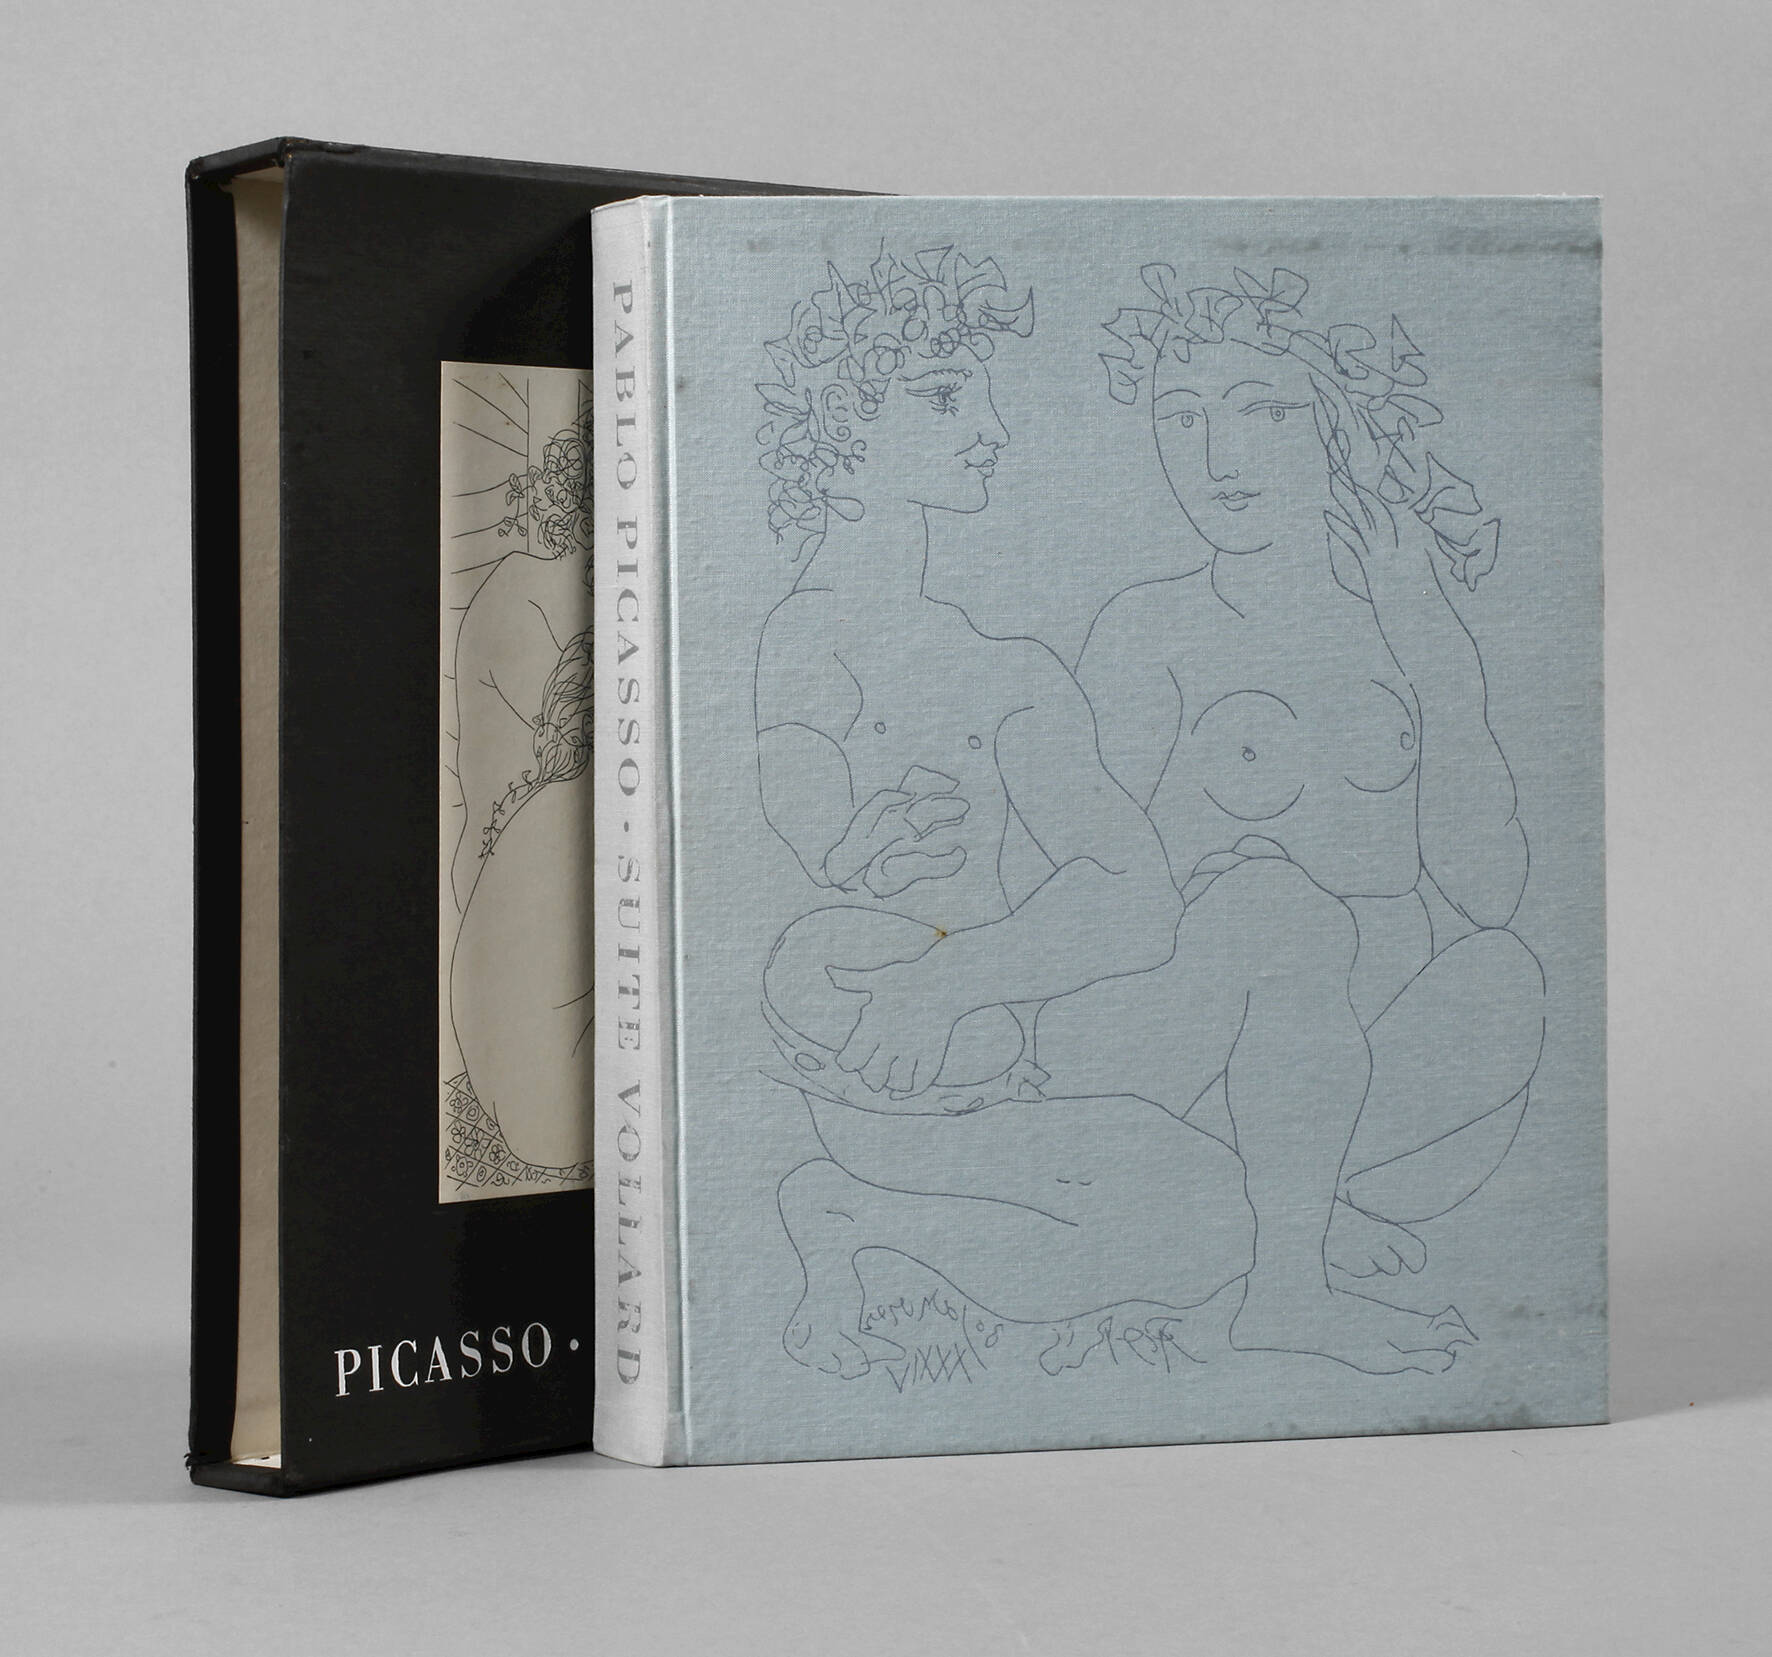 Pablo Picasso - Suite Vollard